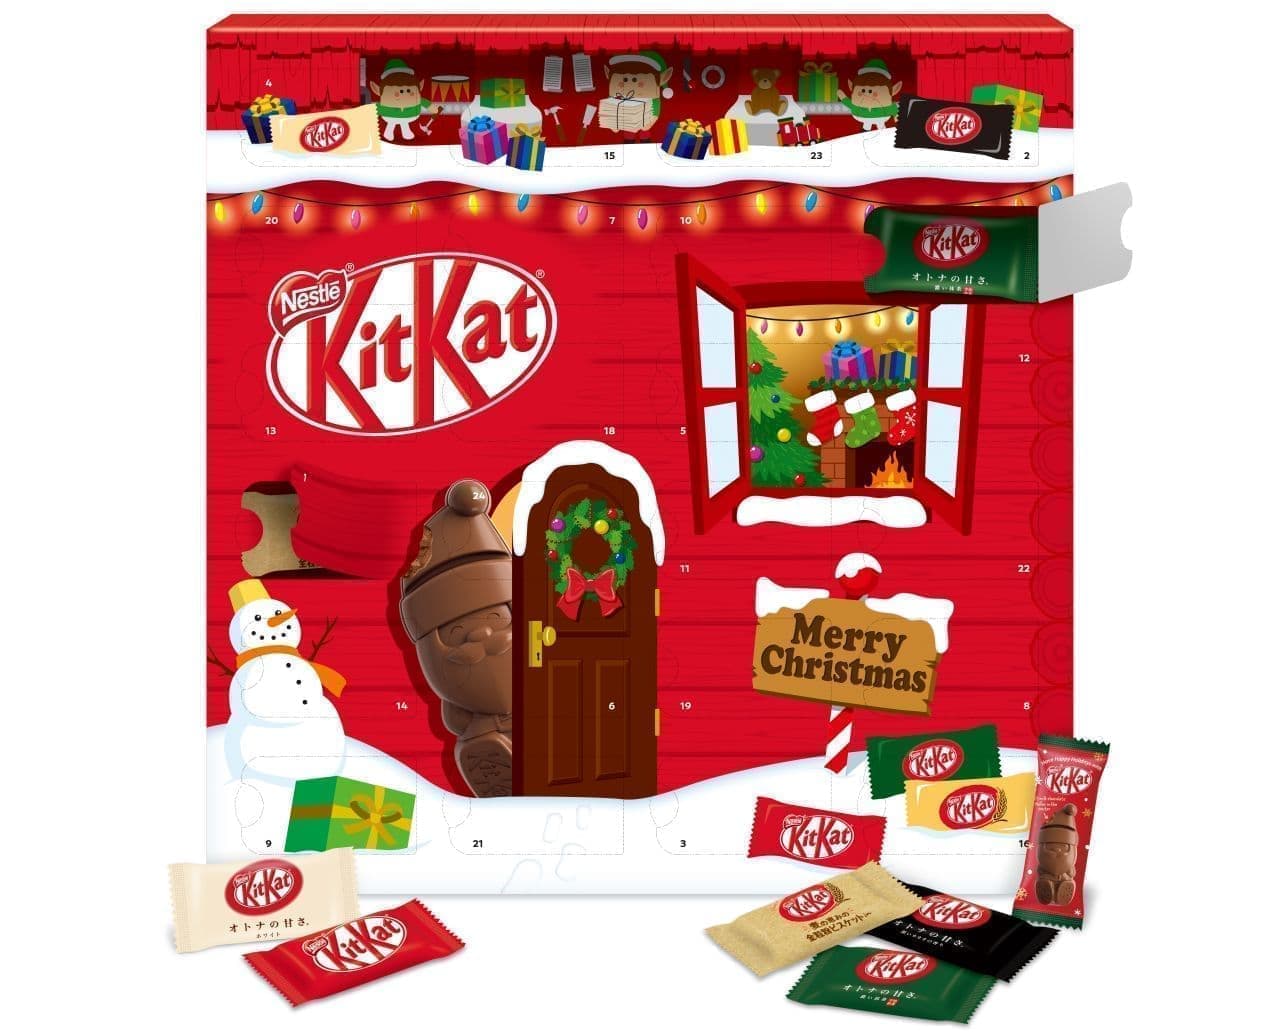 Kit Kat Holiday Santa", a Santa-shaped Kit Kat